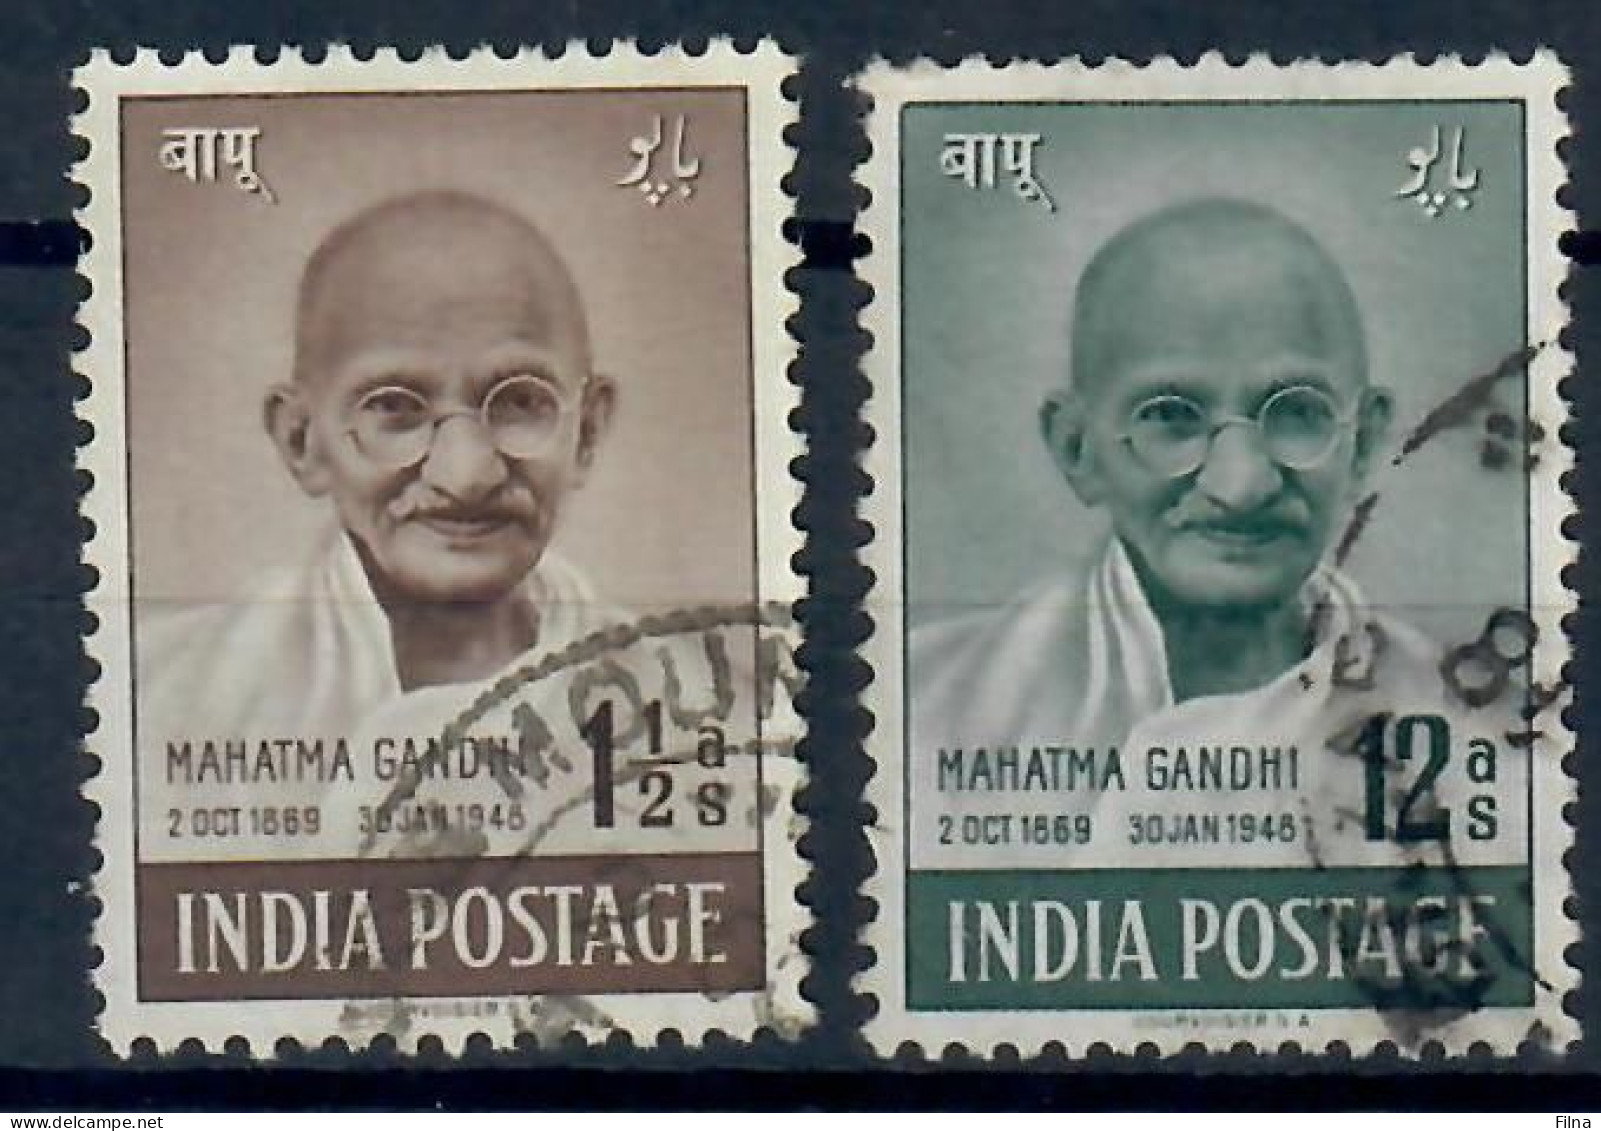 INDIA 1948 MAHATMA GANDHI 2 VALORI USATI - Oblitérés